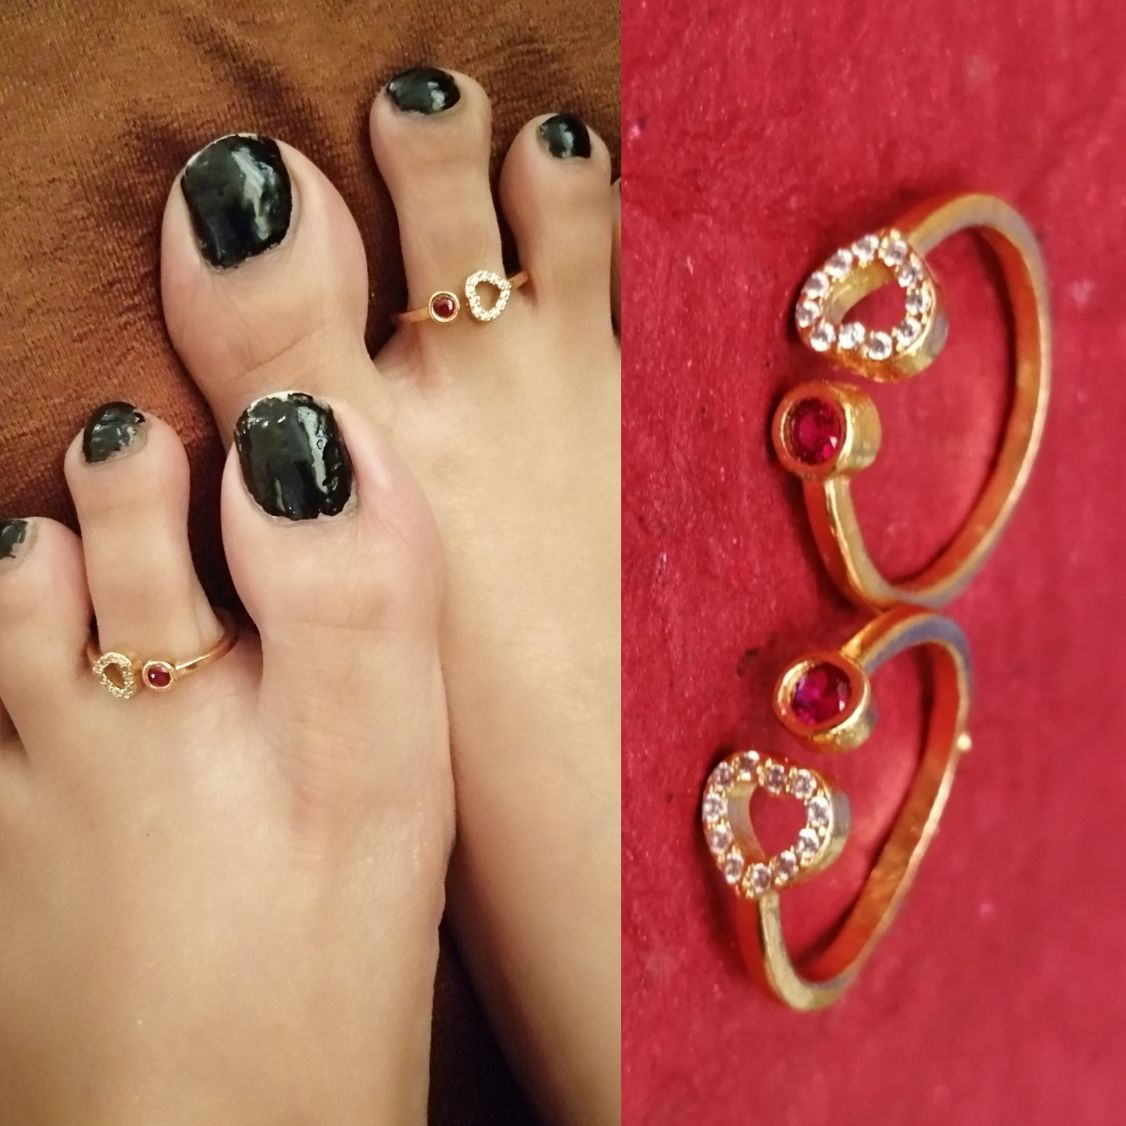 Round American Diamond Toe Rings | Foot Finger Rings | ecoferros.com